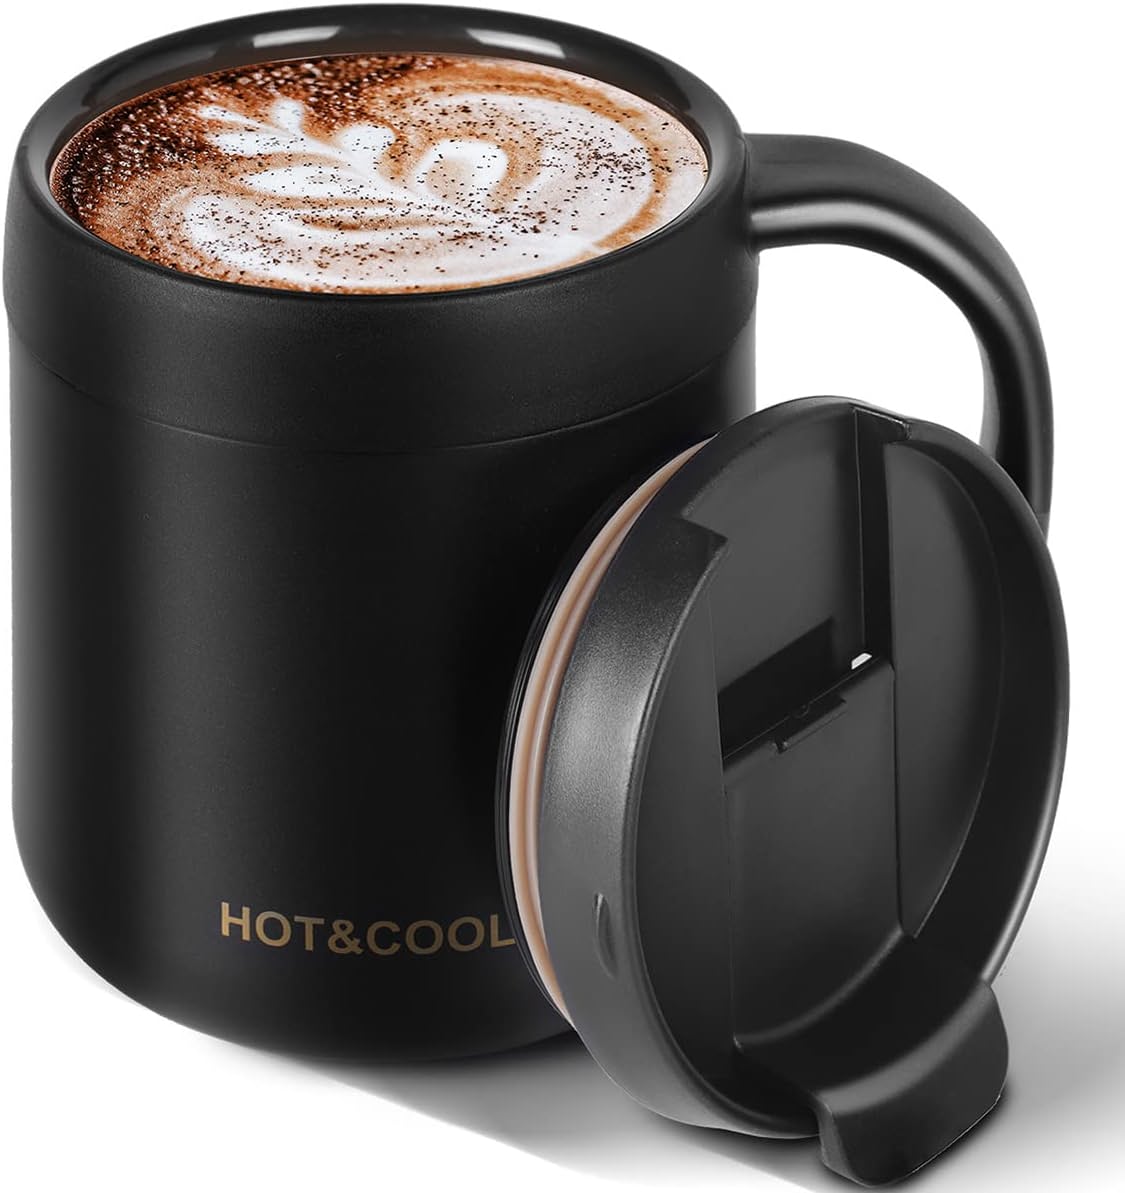 Coffee mug (Credit: Amazon)